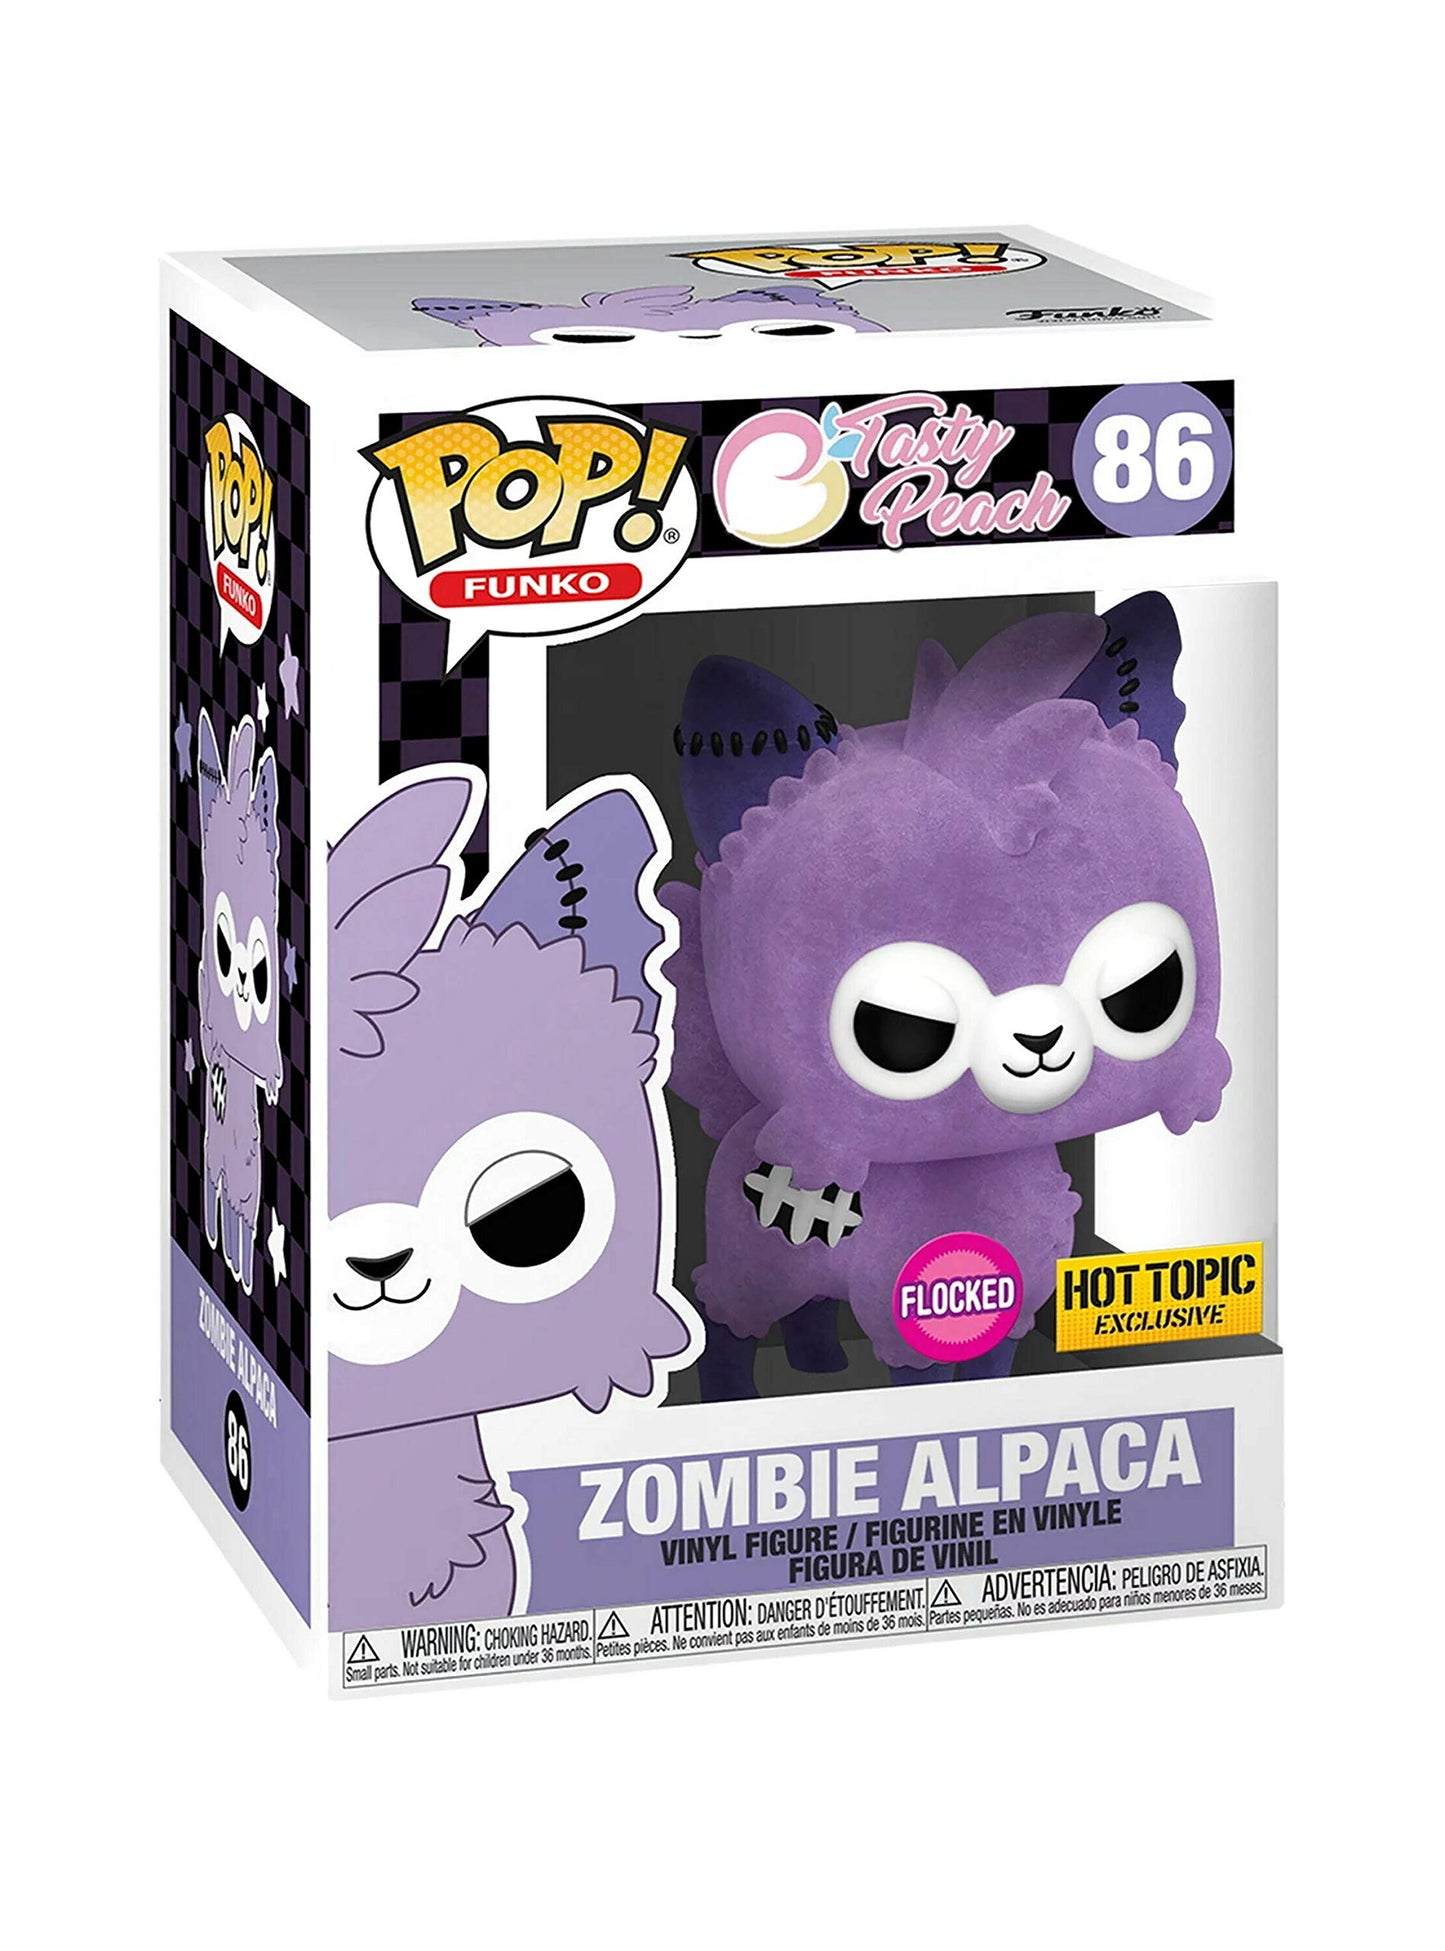 Funko Pop! Icons Tasty Peach - Zombie Alpaca #86 Flocked Hot Topic Exclusive